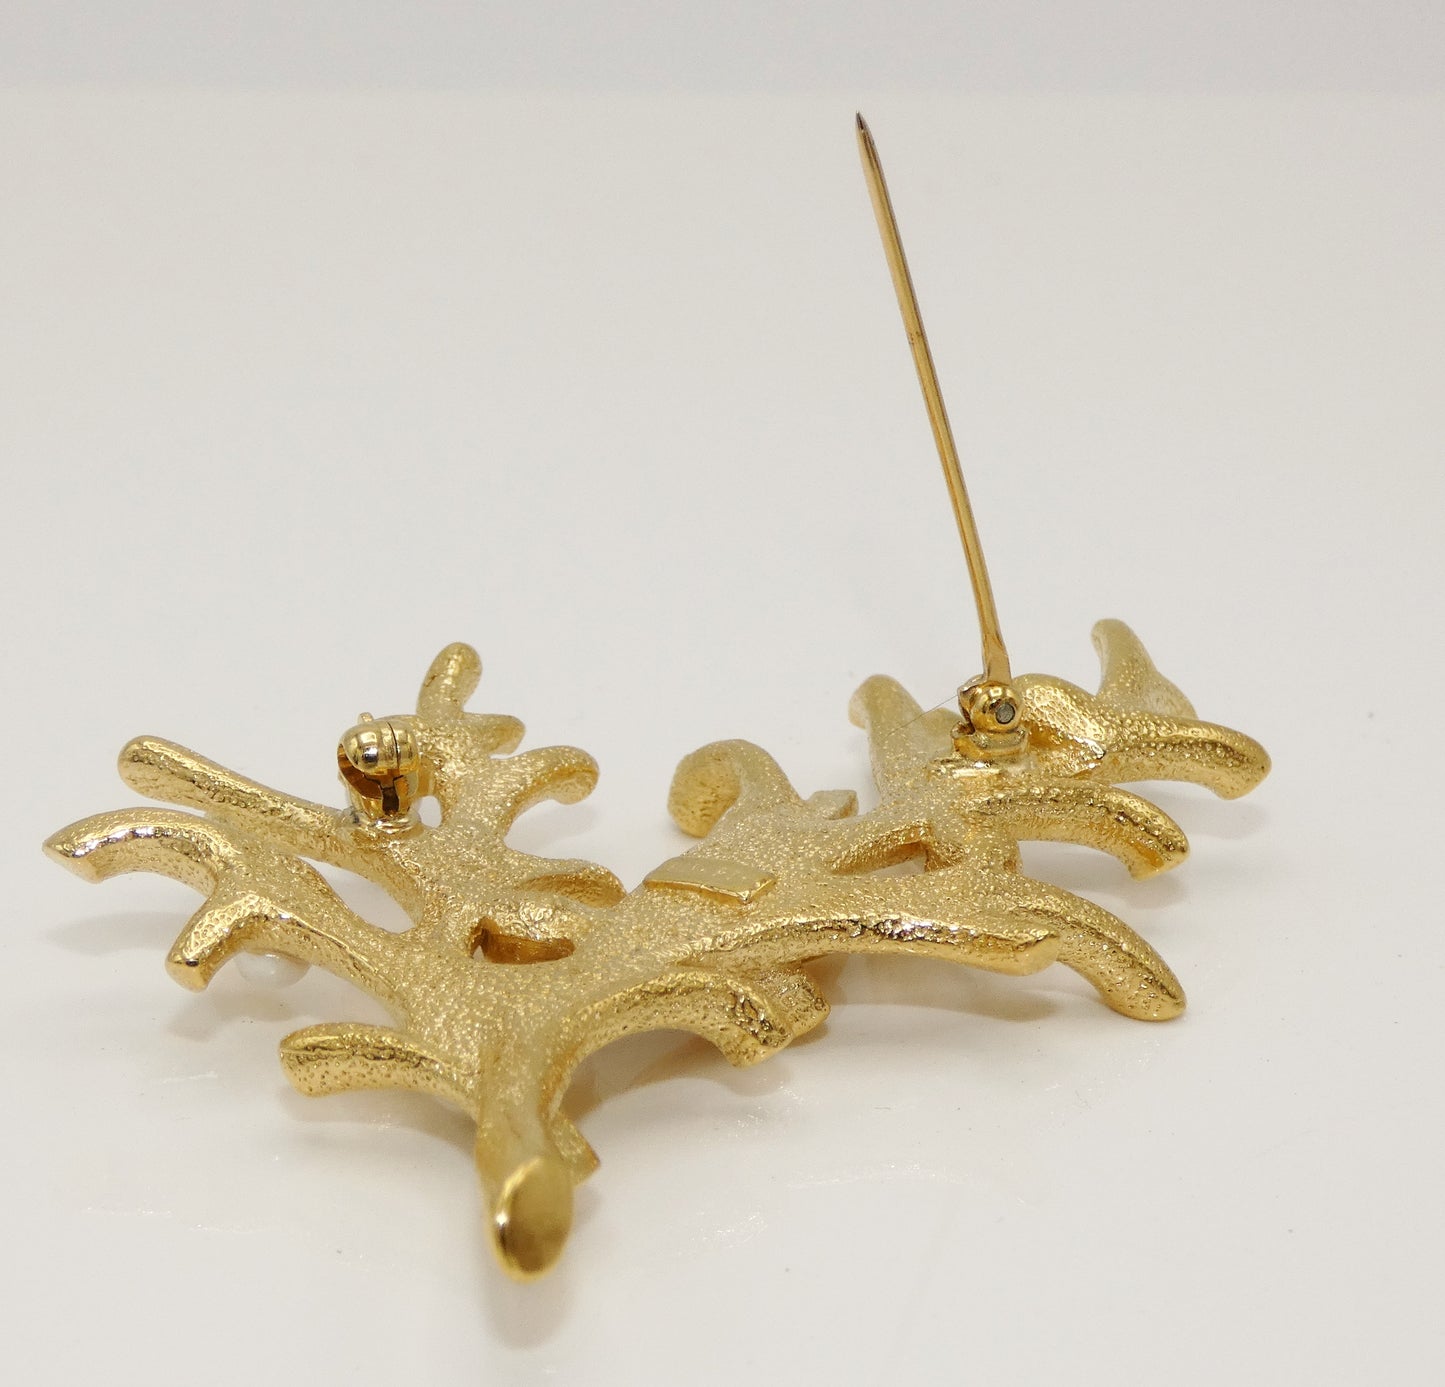 Trifari Sea Coral Pin/ Brooch with Faux Pearls